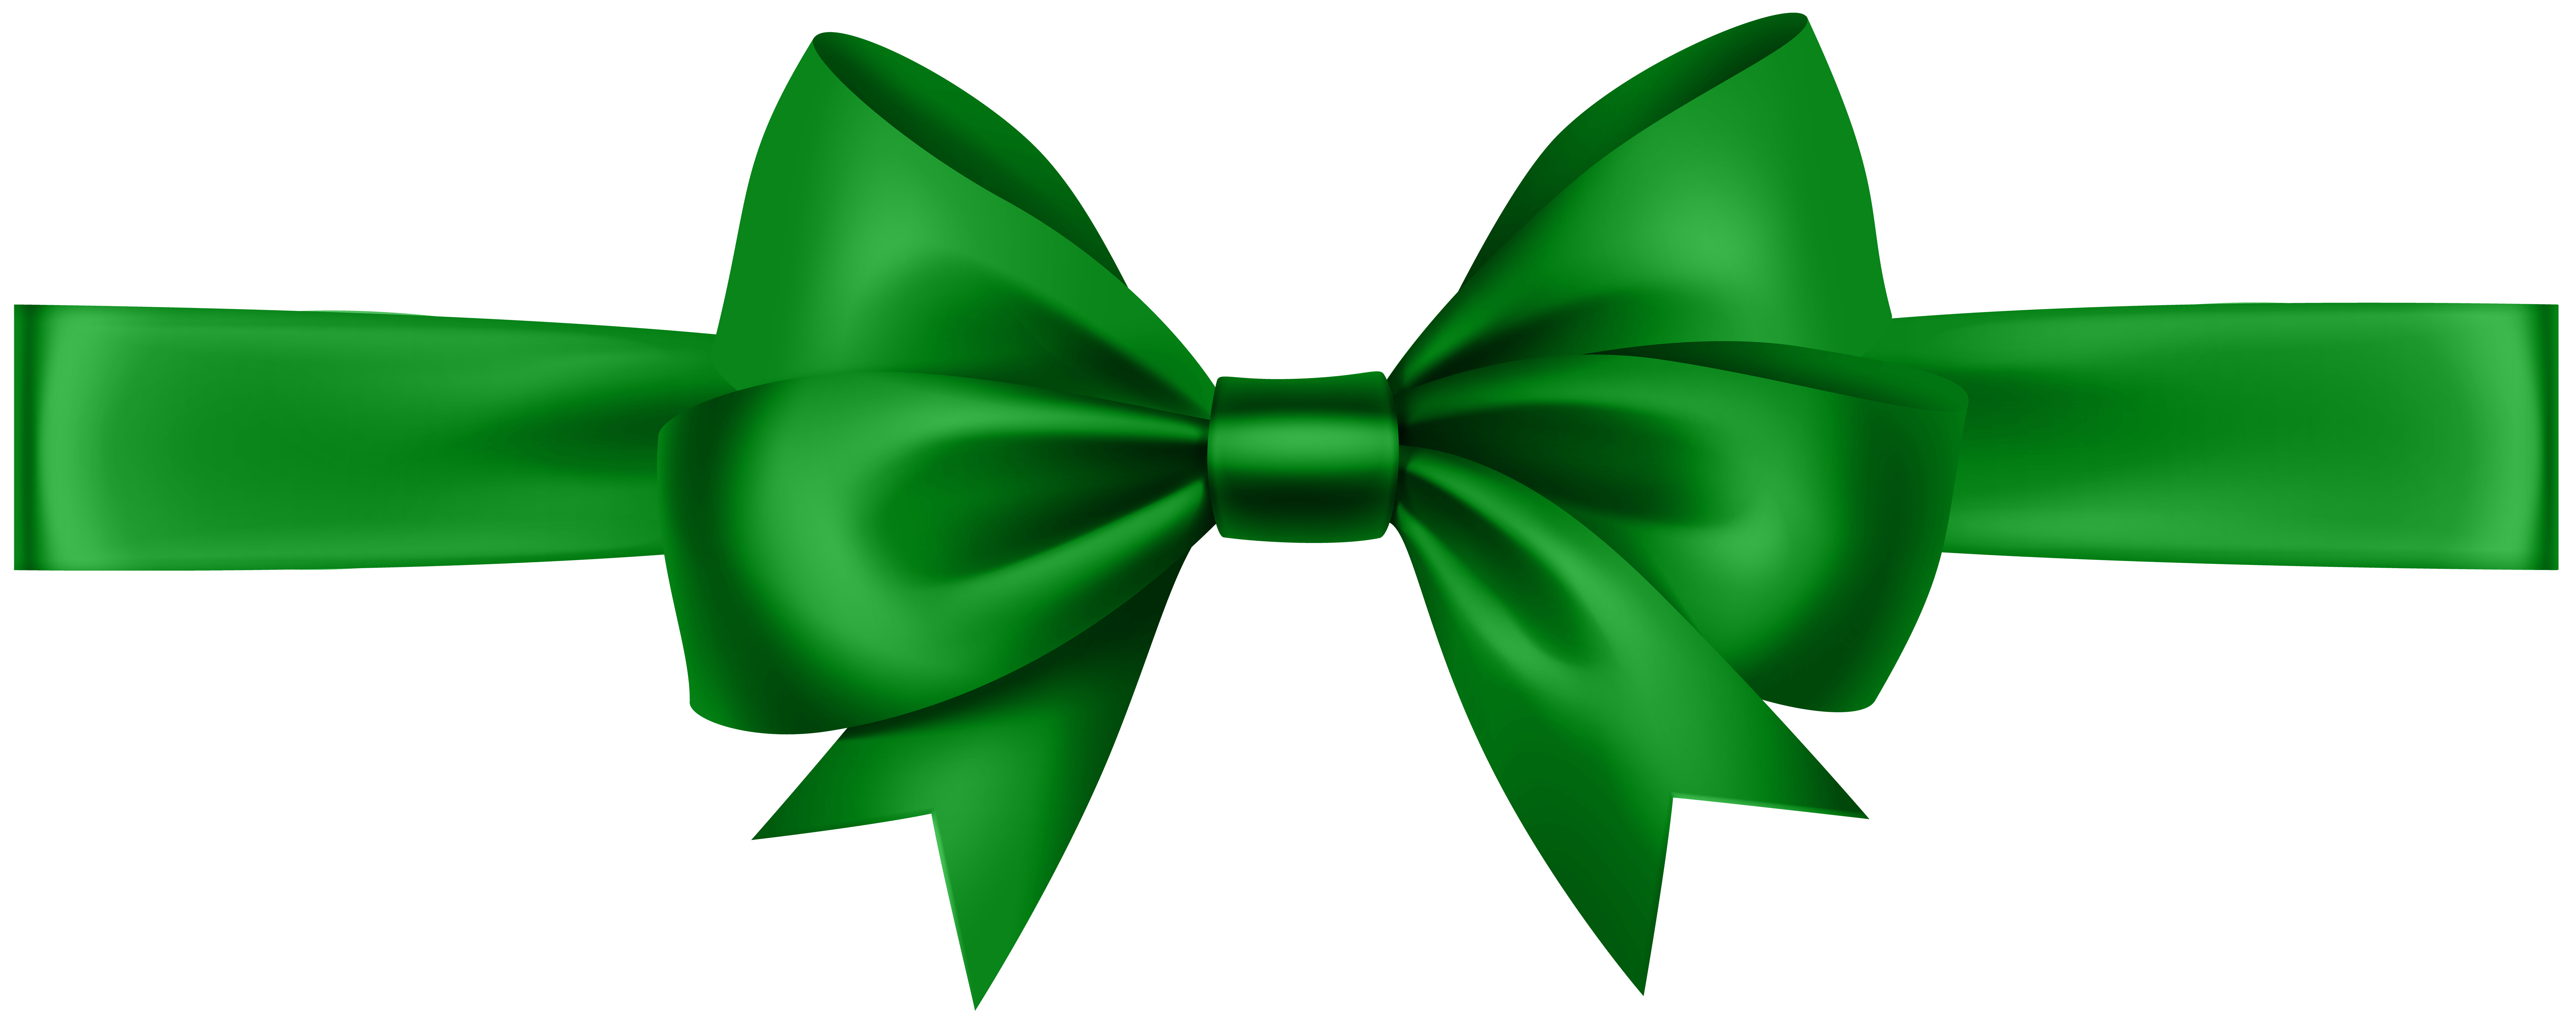 Green bow photo